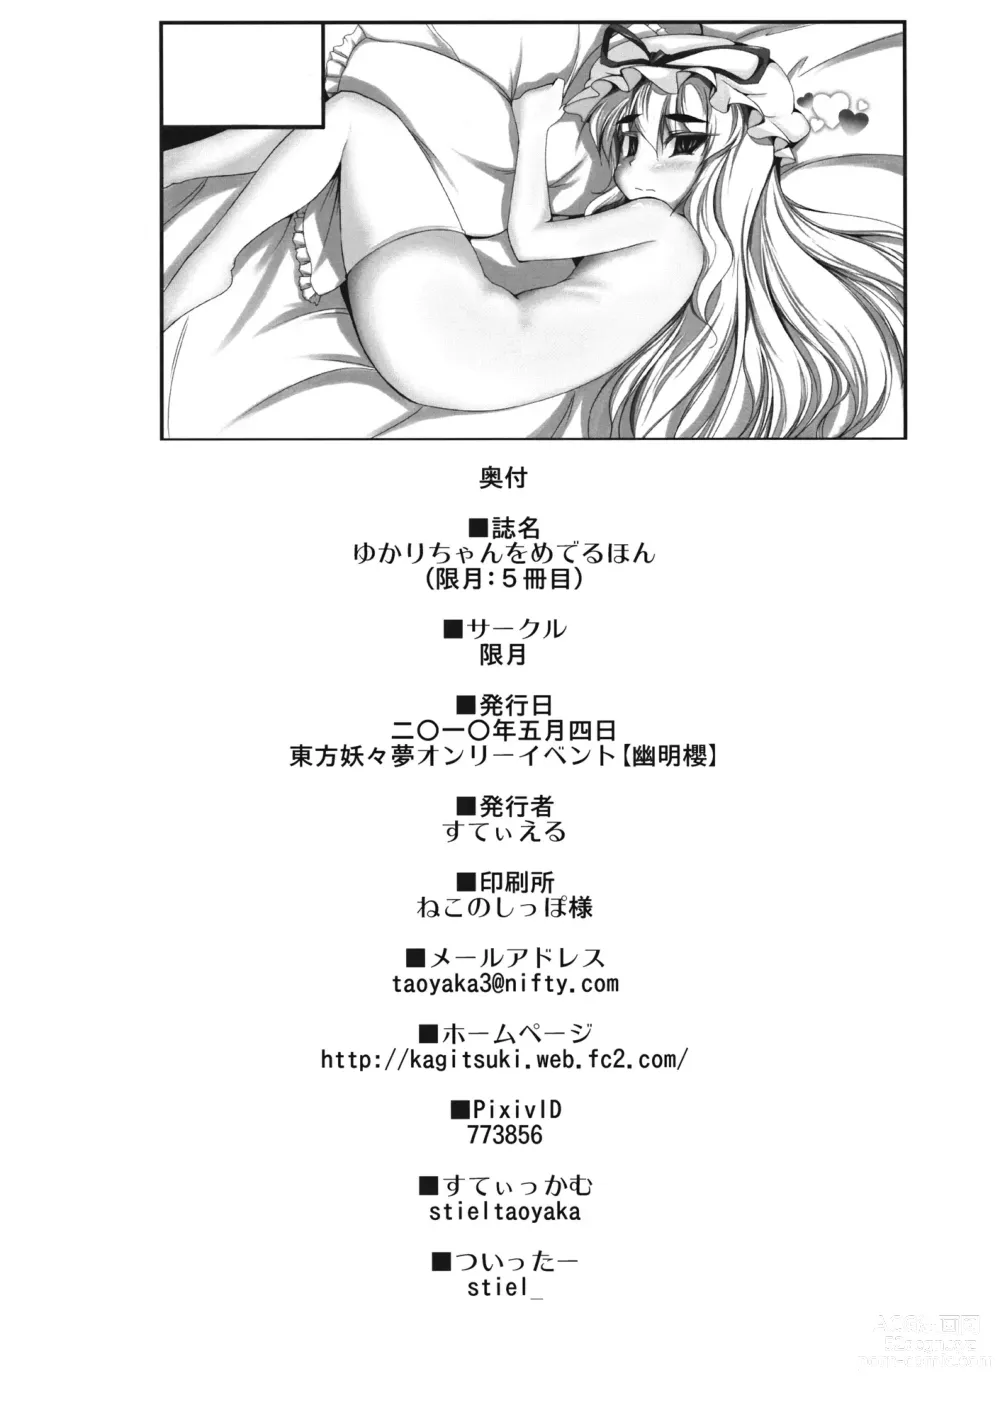 Page 21 of doujinshi 유카리 쨩을 애호하는 책